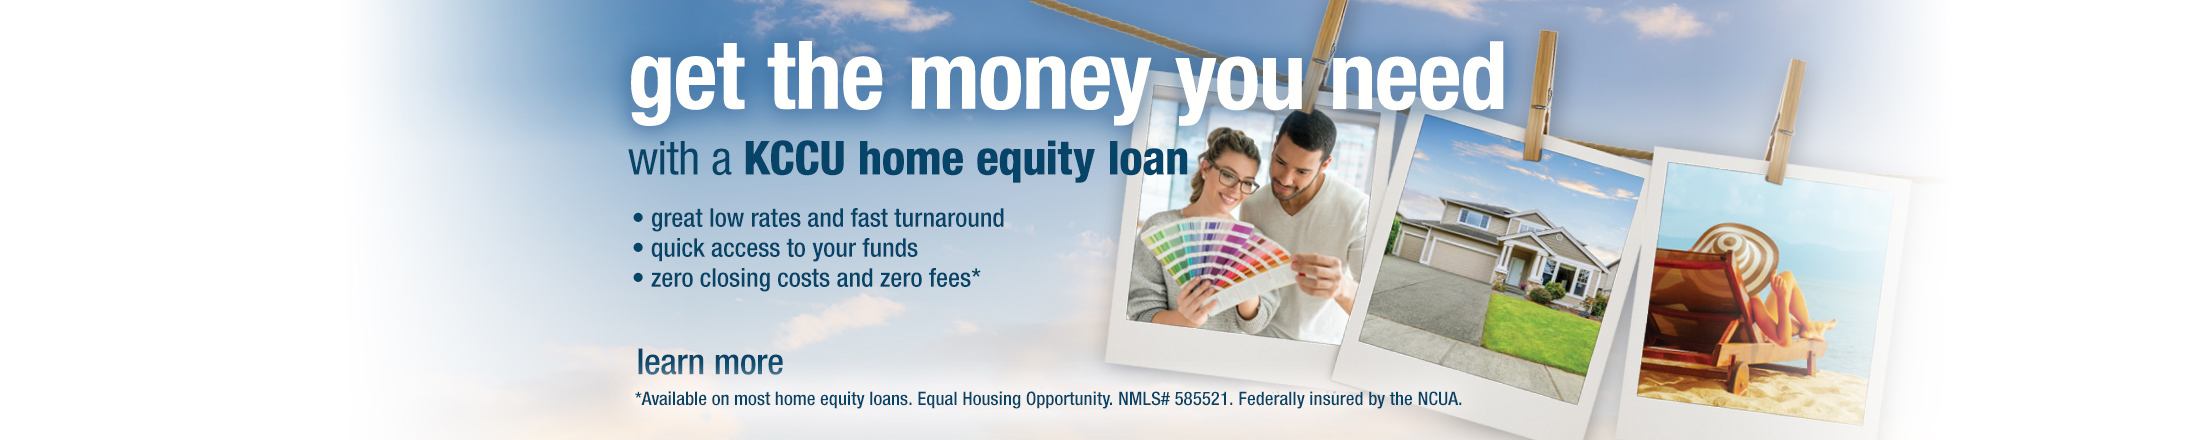 Home Equity loan 